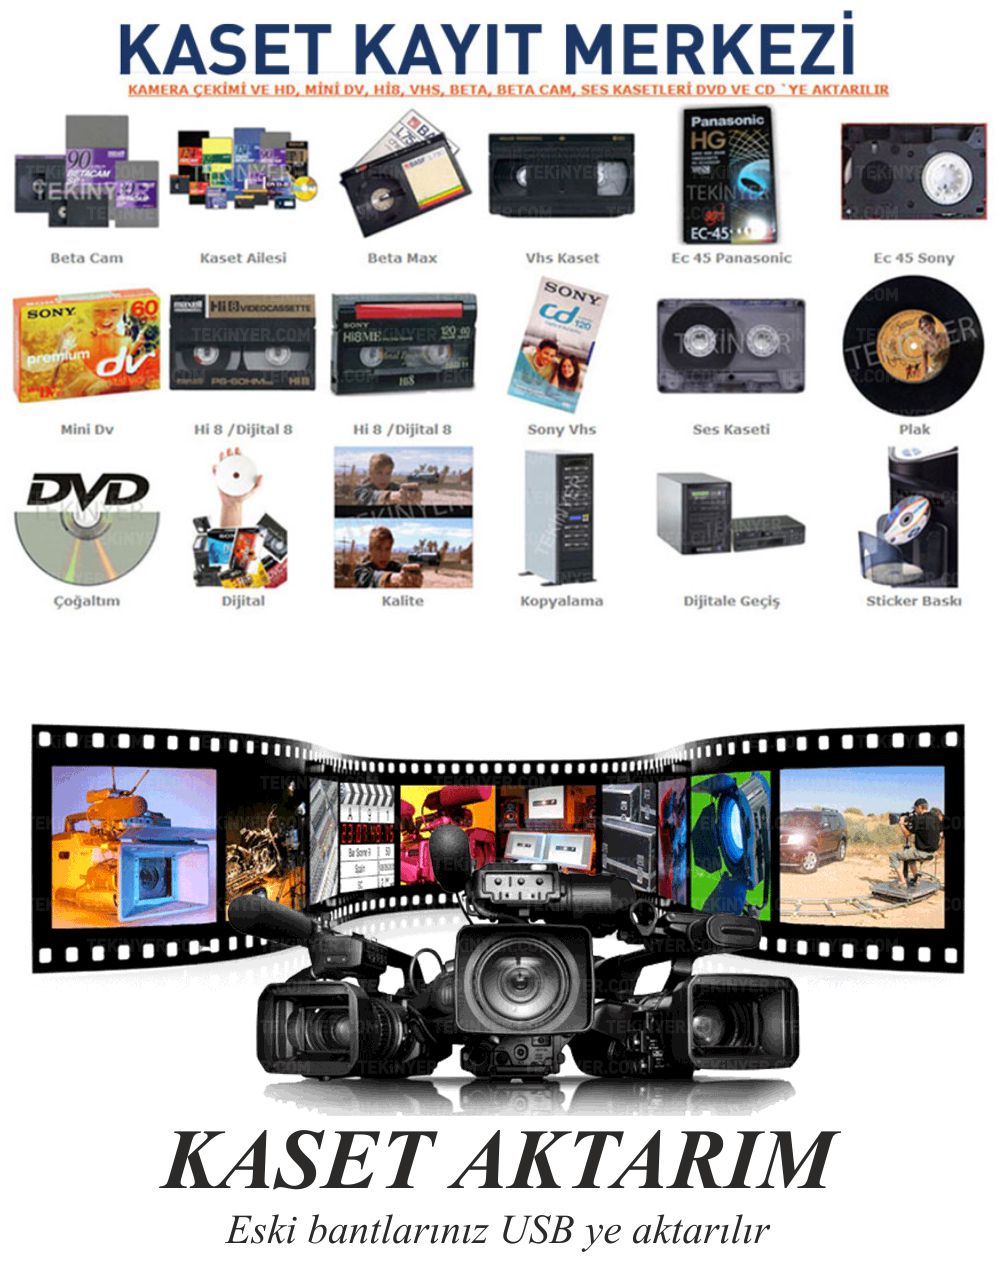 Vhs Betamax Hi8 Dijital8 Mini DV Kasetten Aktarma Analog Dijital